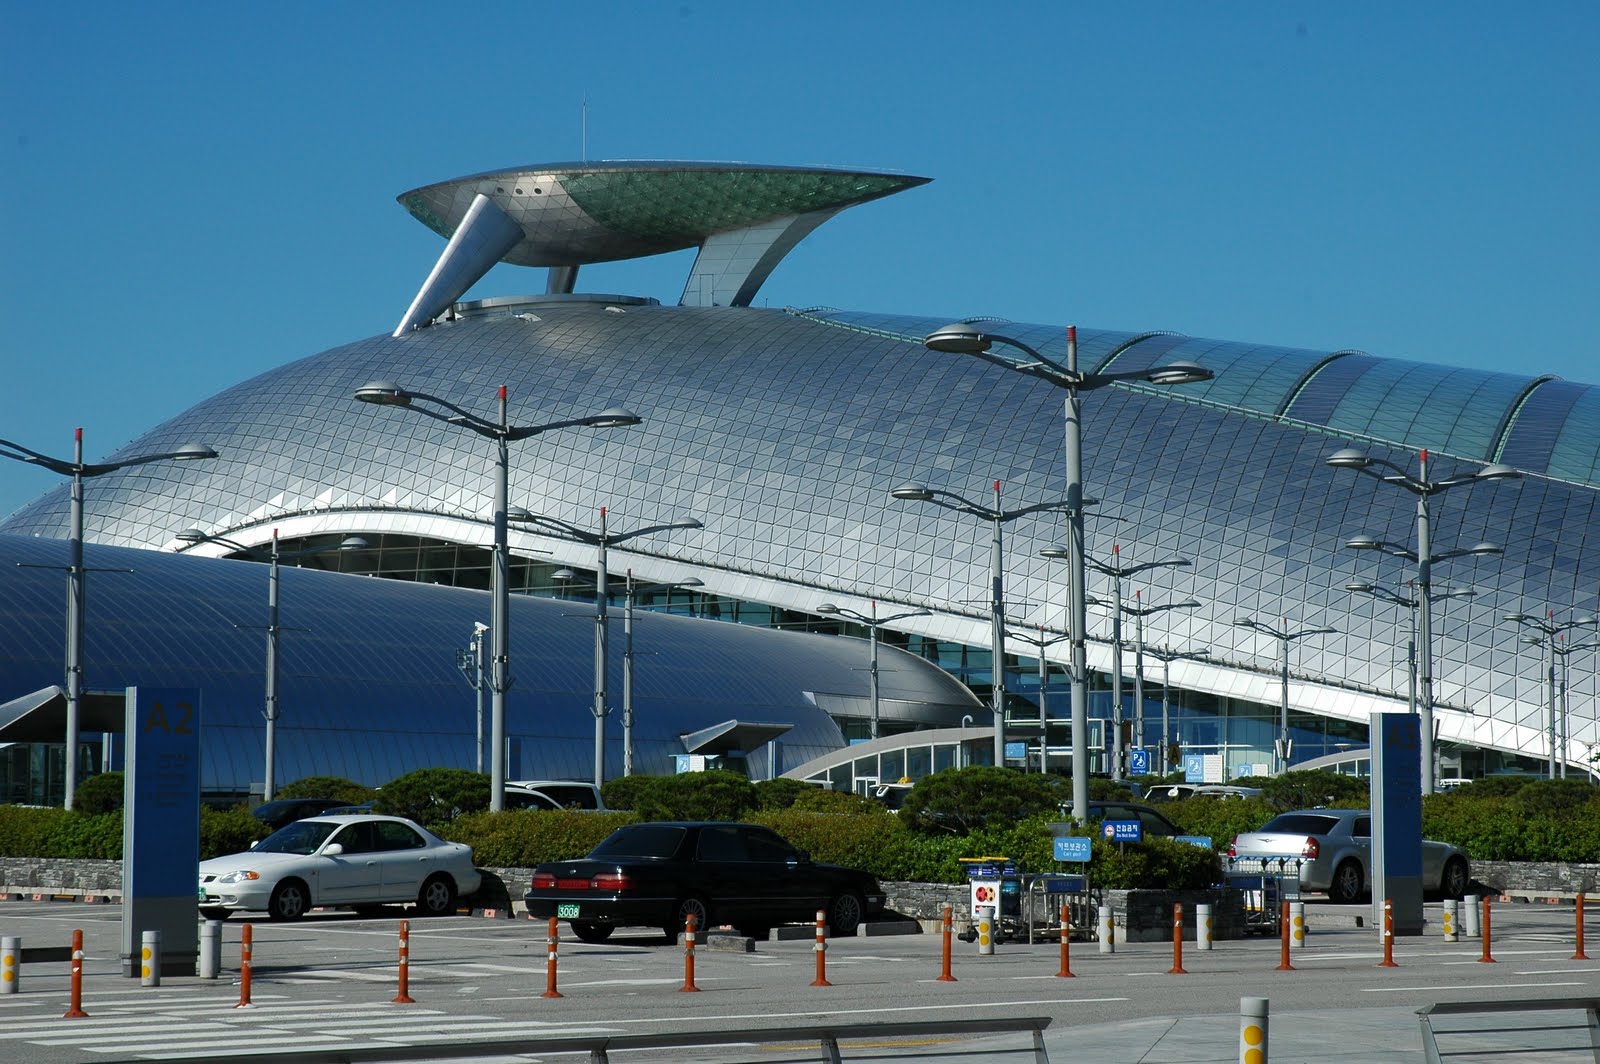 Airport: Seoul Incheon International Airport (ICN)